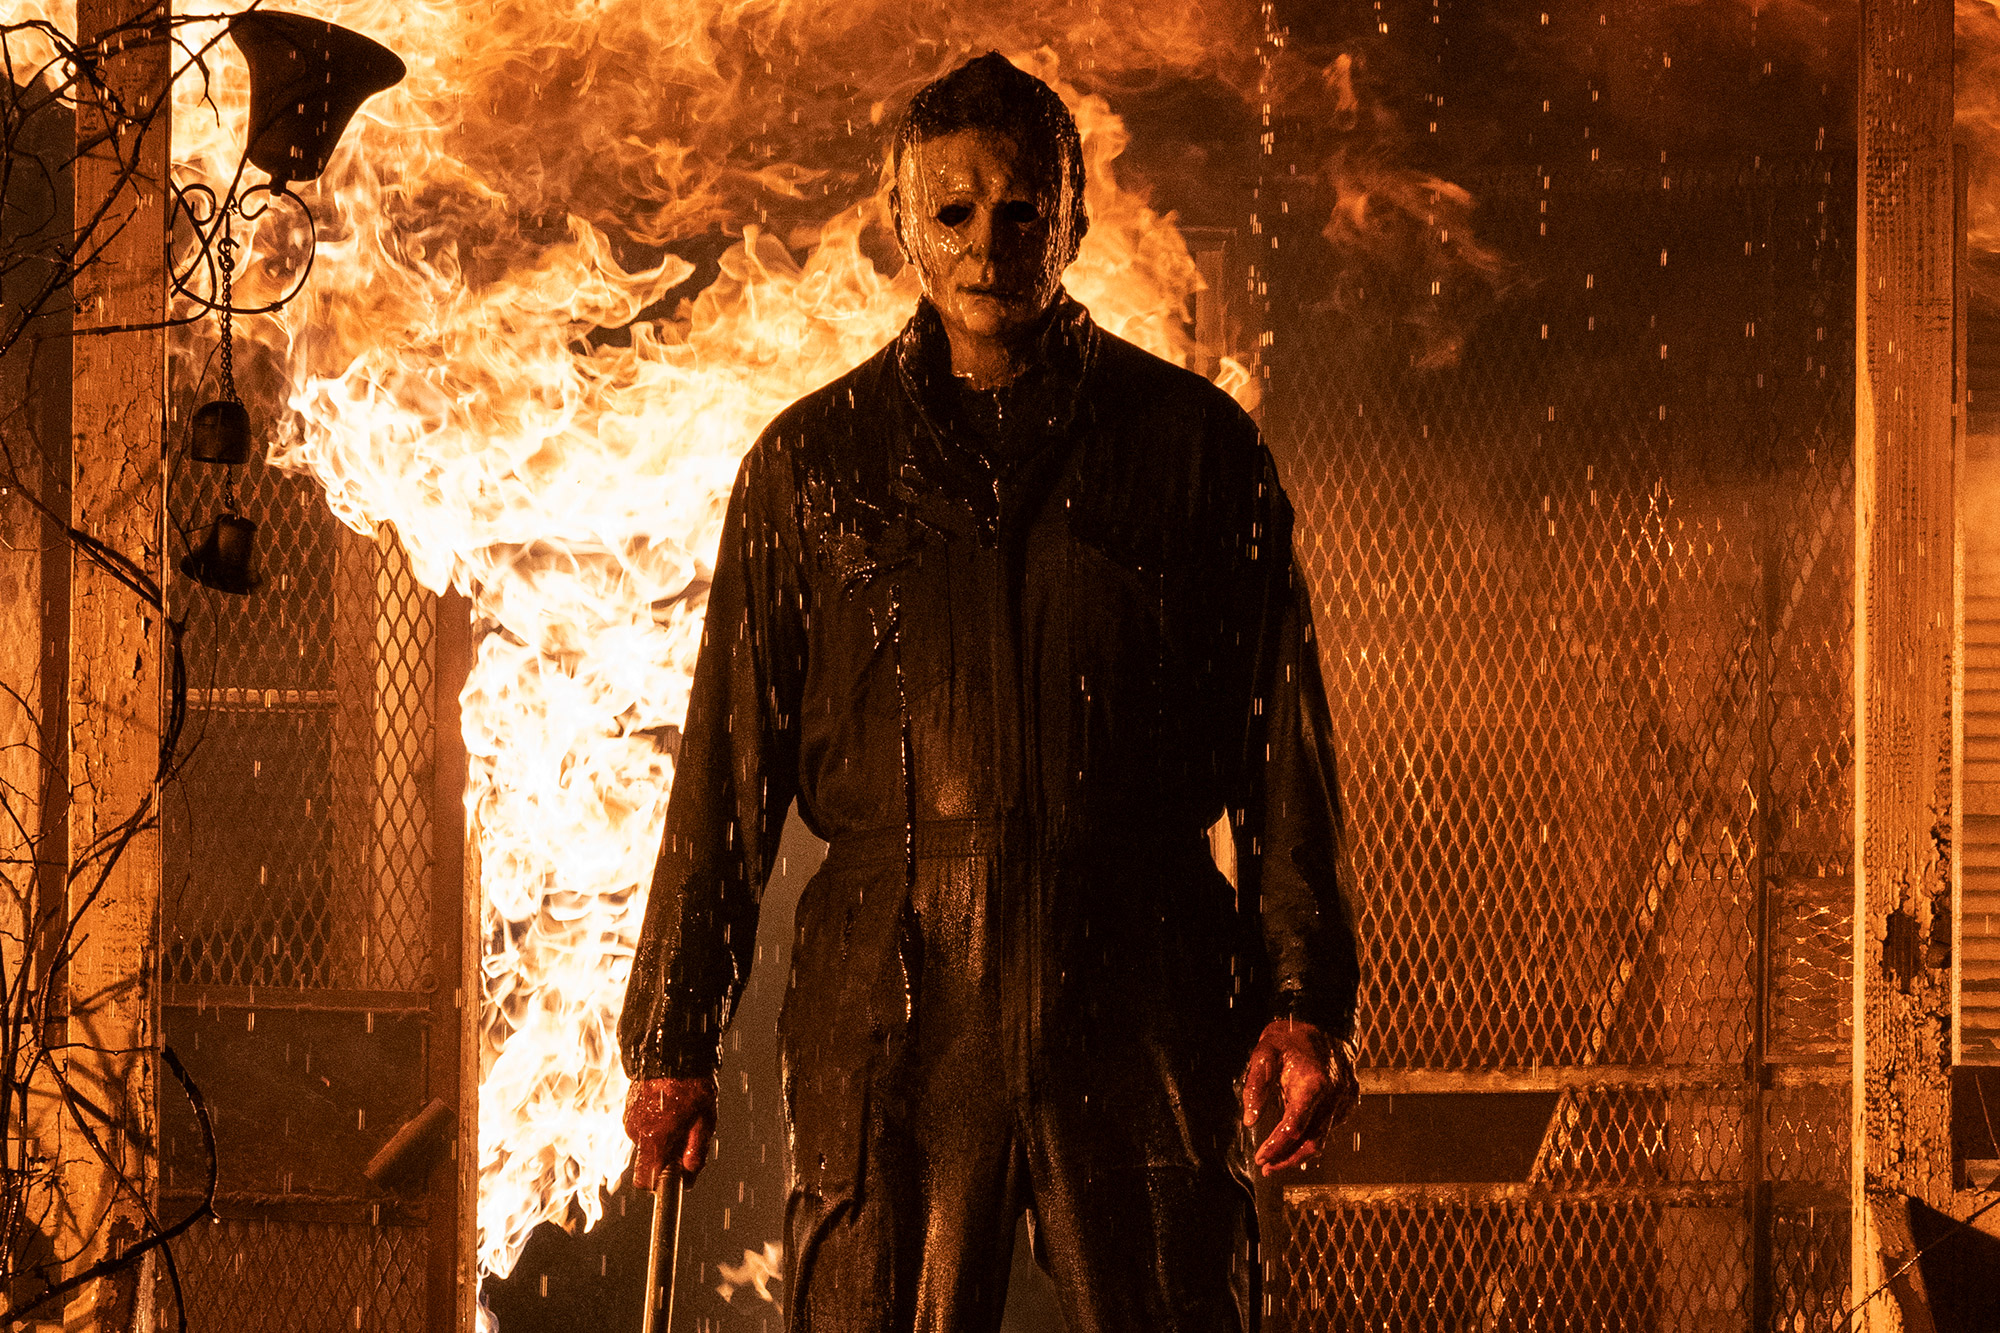 Interview: Director David Gordon Green And Producer Jason Blum Talk ‘Halloween Kills’, Trauma & More